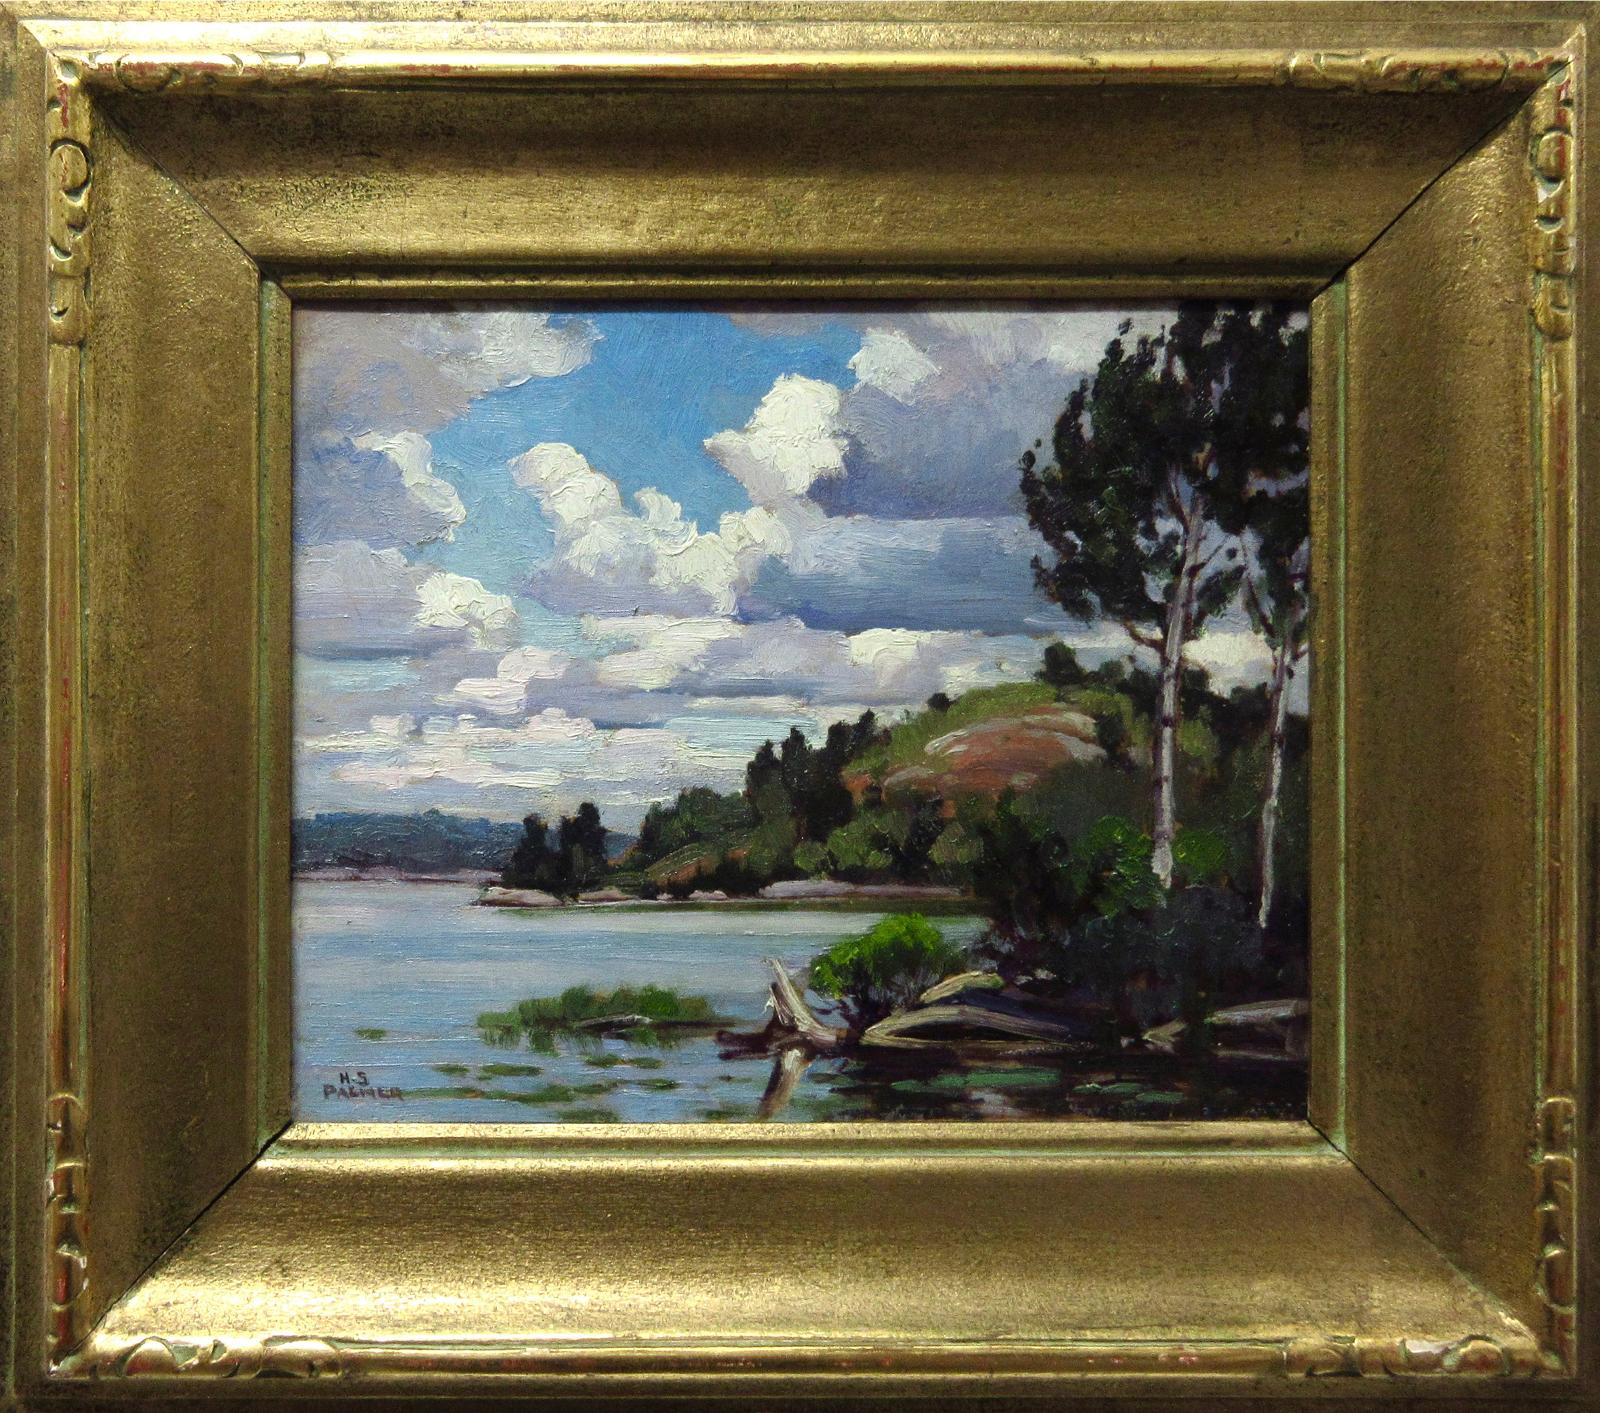 Herbert Sidney Palmer (1881-1970) - Near Kirk's Cove, Gull Lake